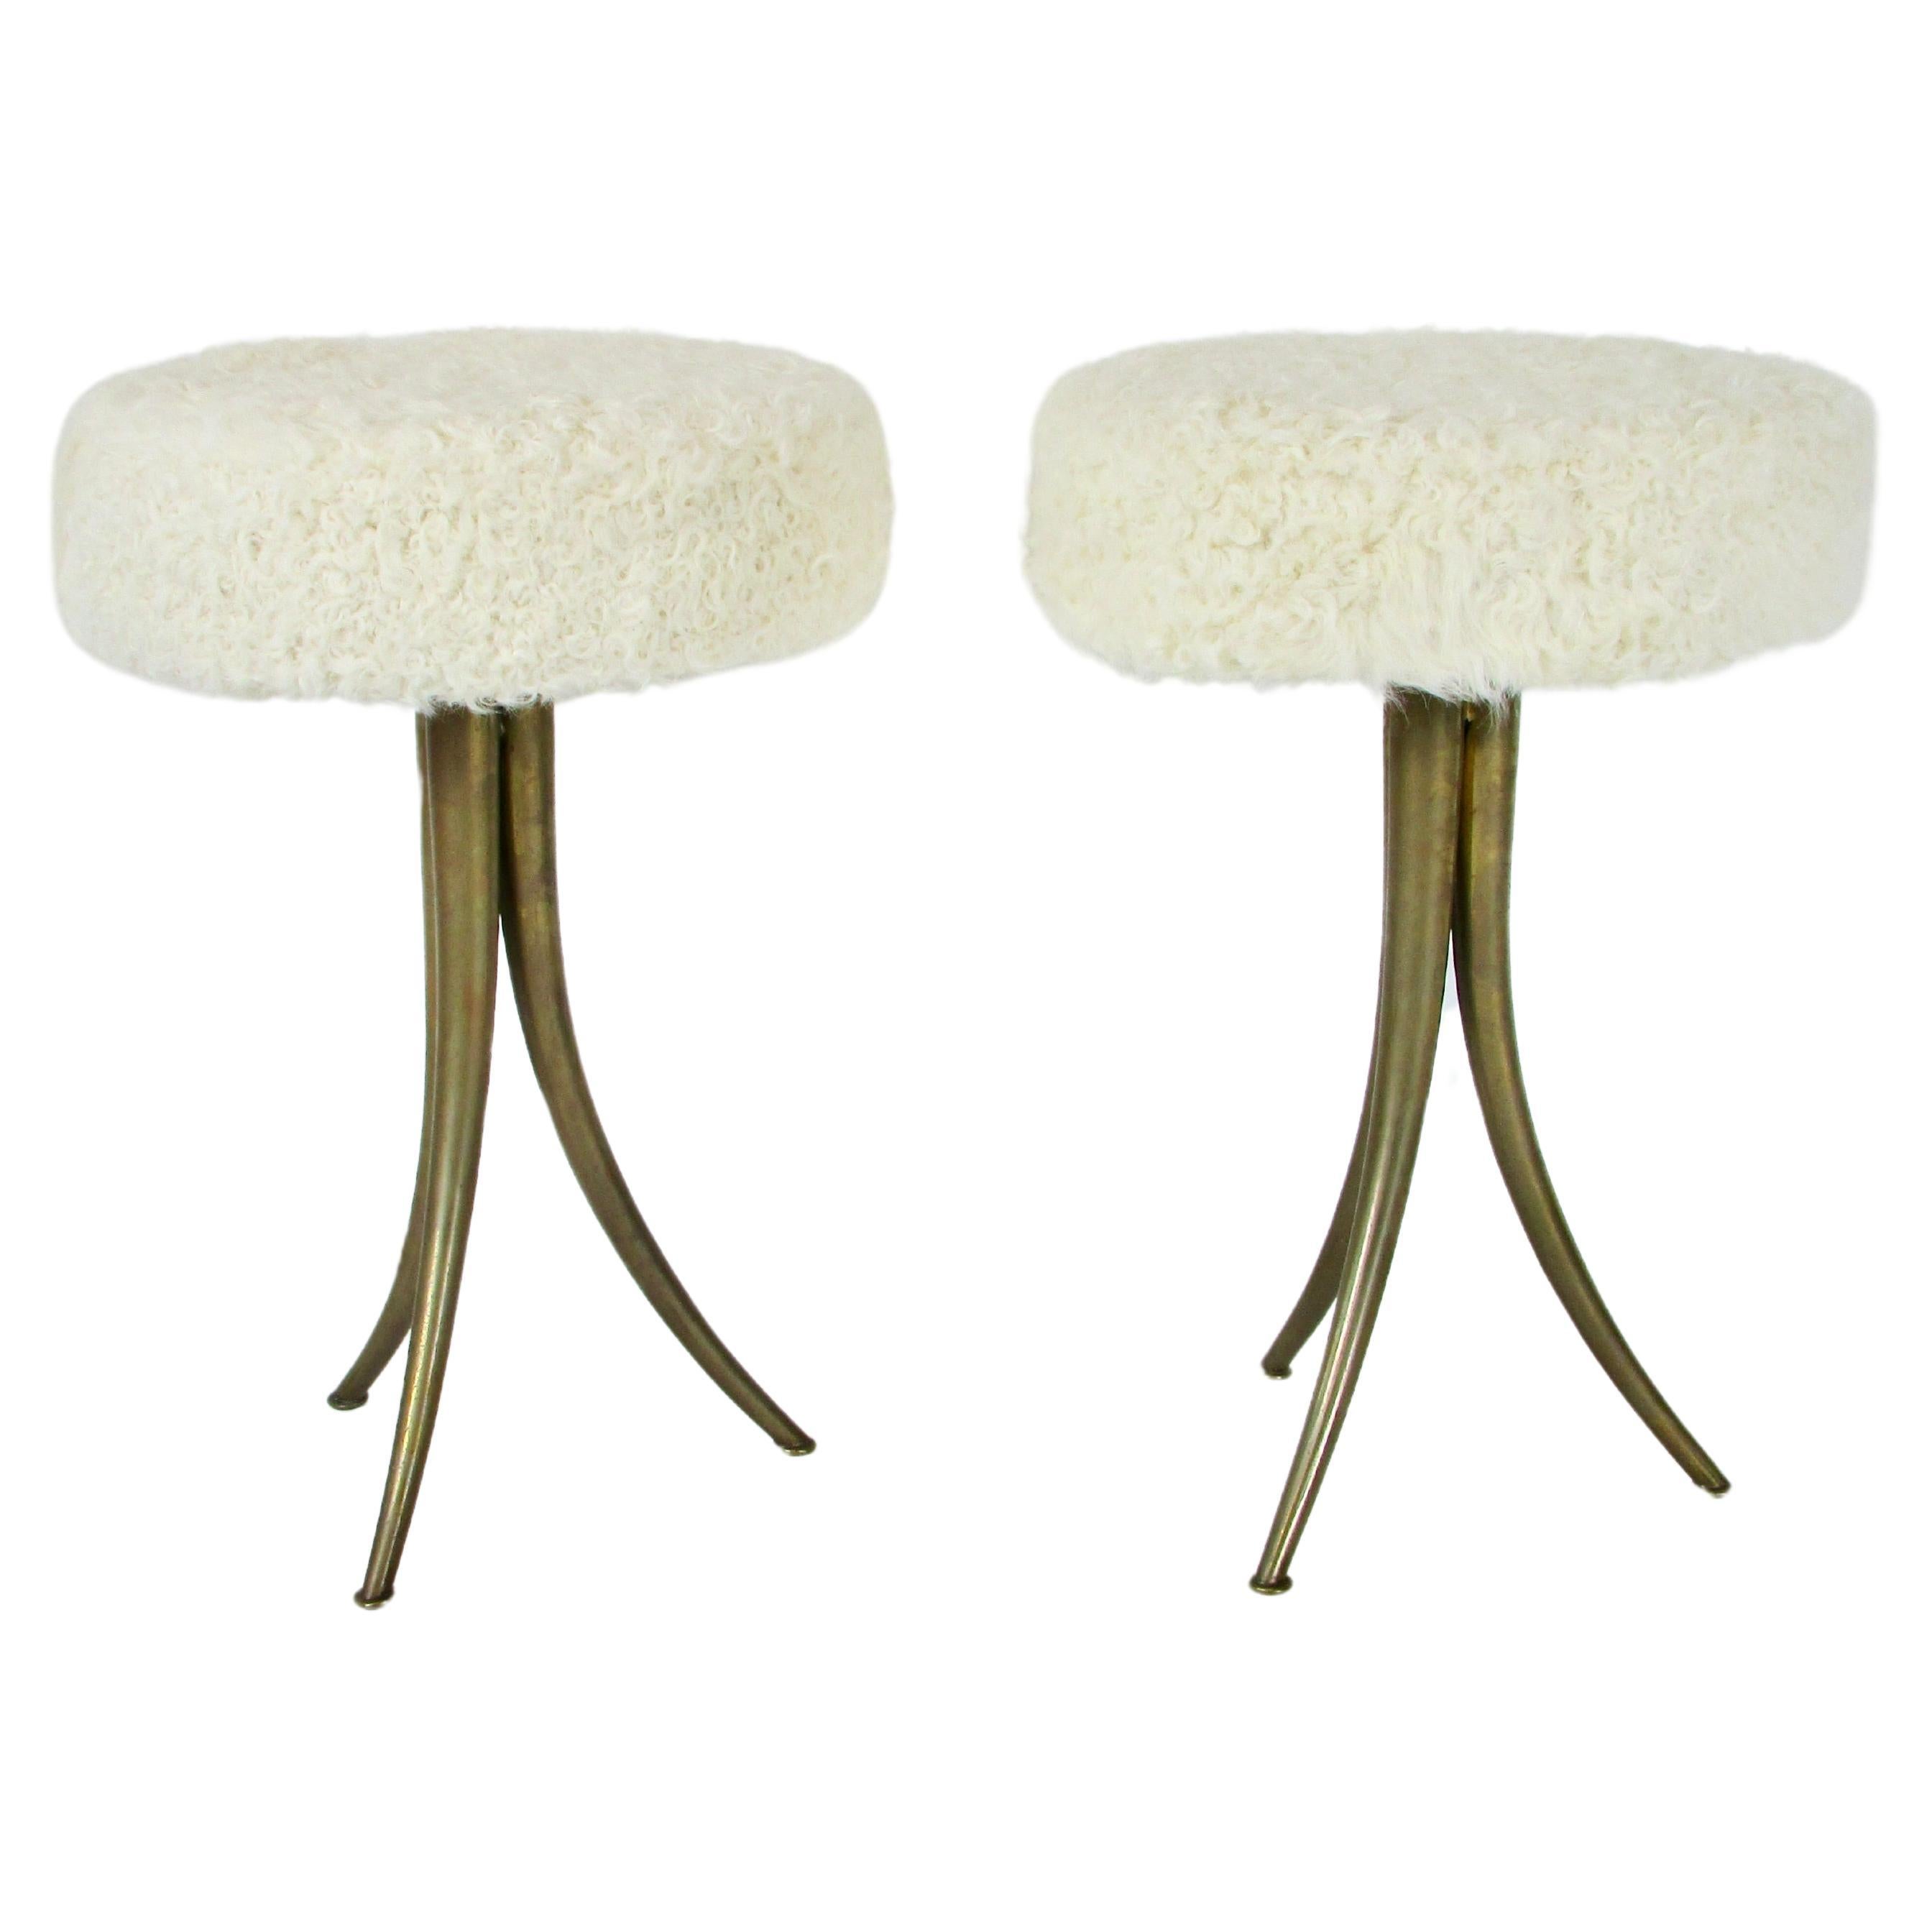 Pair of lamb skin covered brass leg petite Italian stools